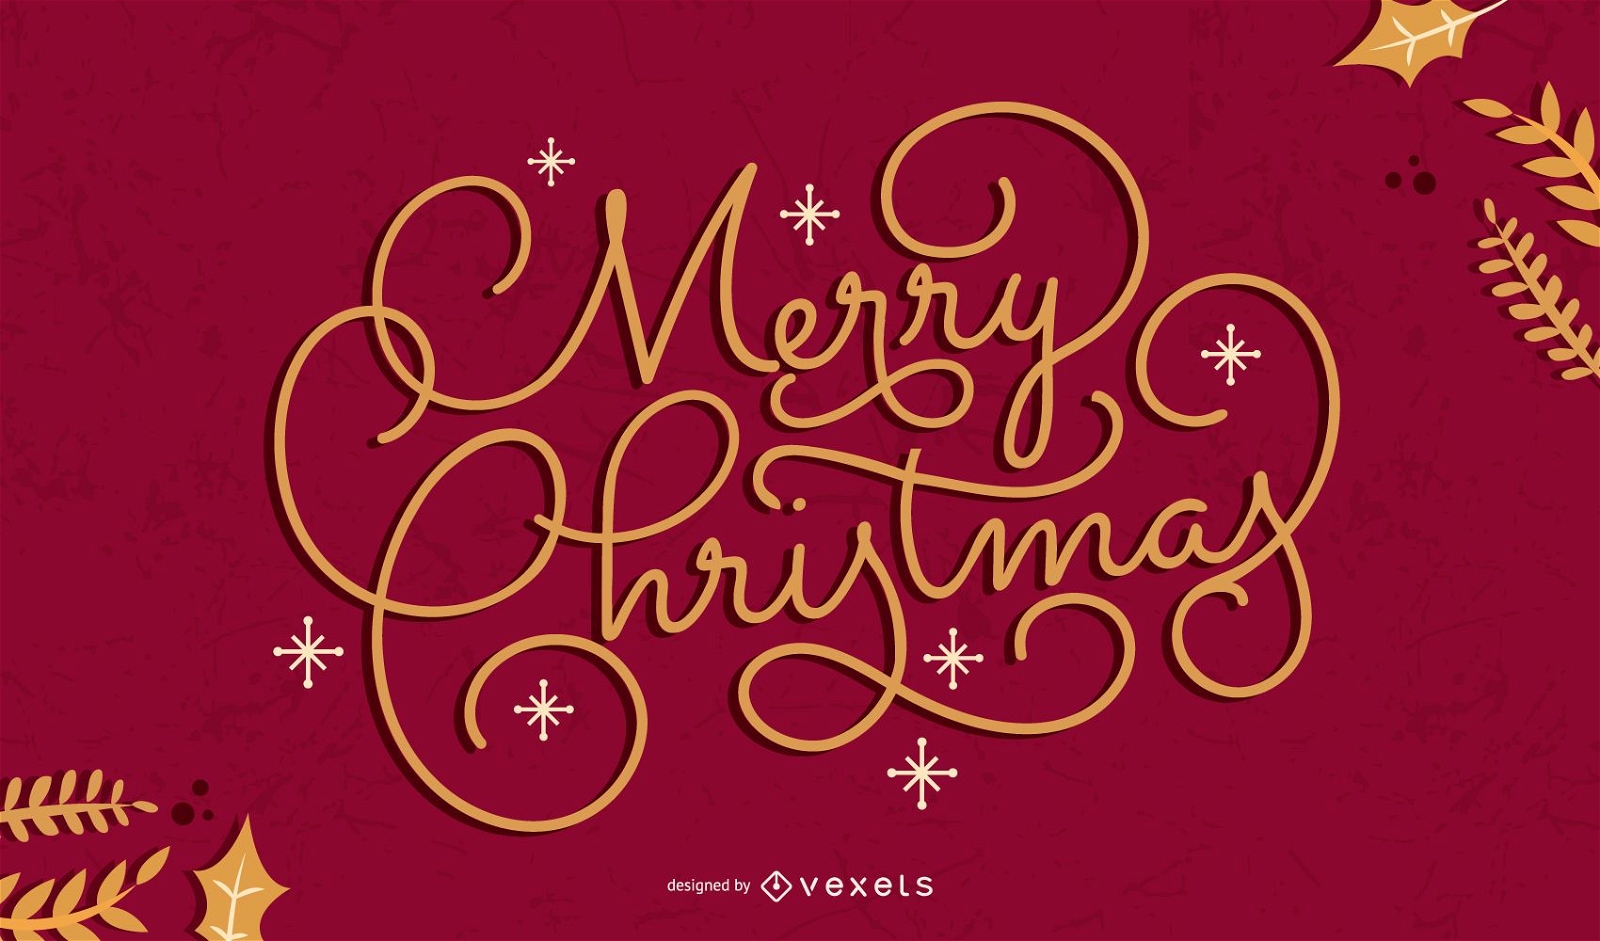 Merry christmas artistic lettering design